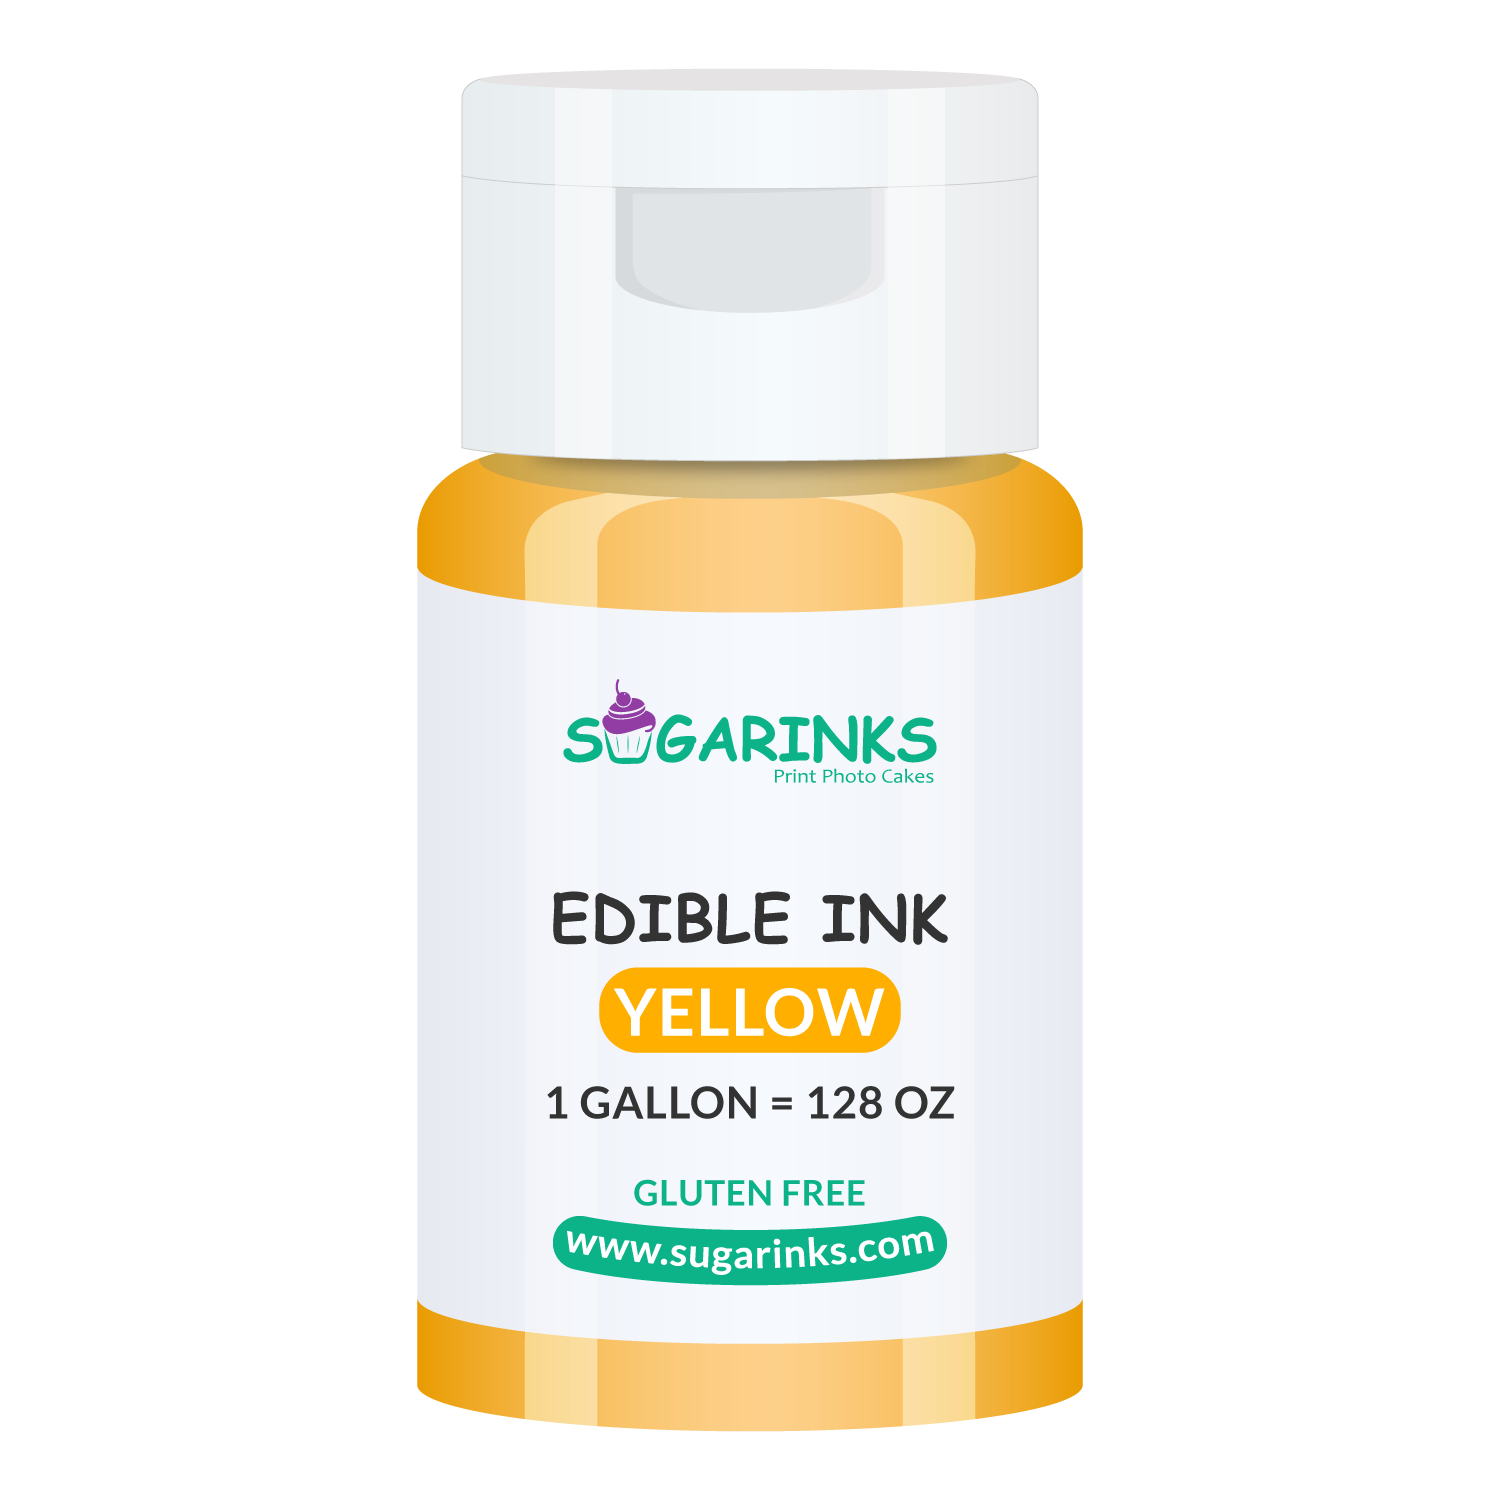 Sugarinks Edible Ink Refill for Epson Edible Printers (1 Gallon/128Oz) – Yellow